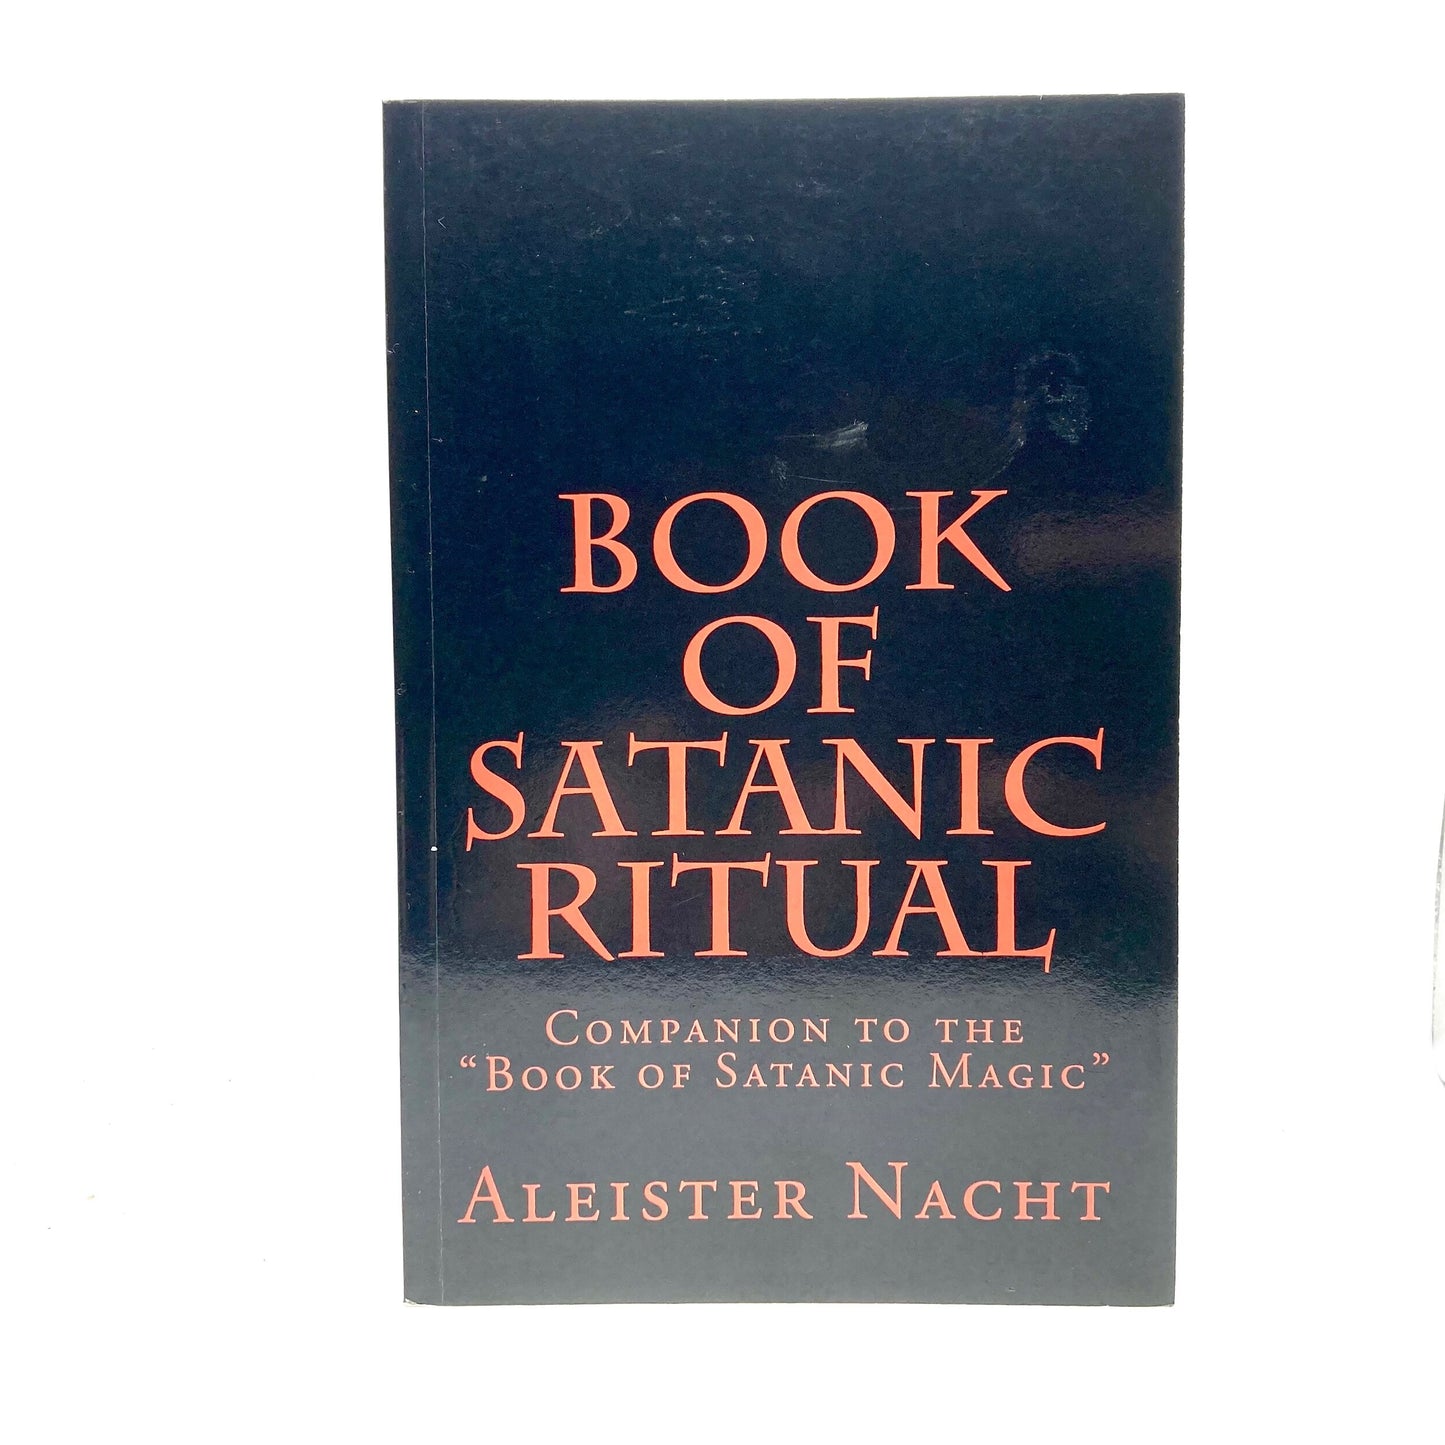 NACHT, Aleister "Book of Satanic Ritual" [Loki / Speckbohne Publishing, 2012] - Buzz Bookstore